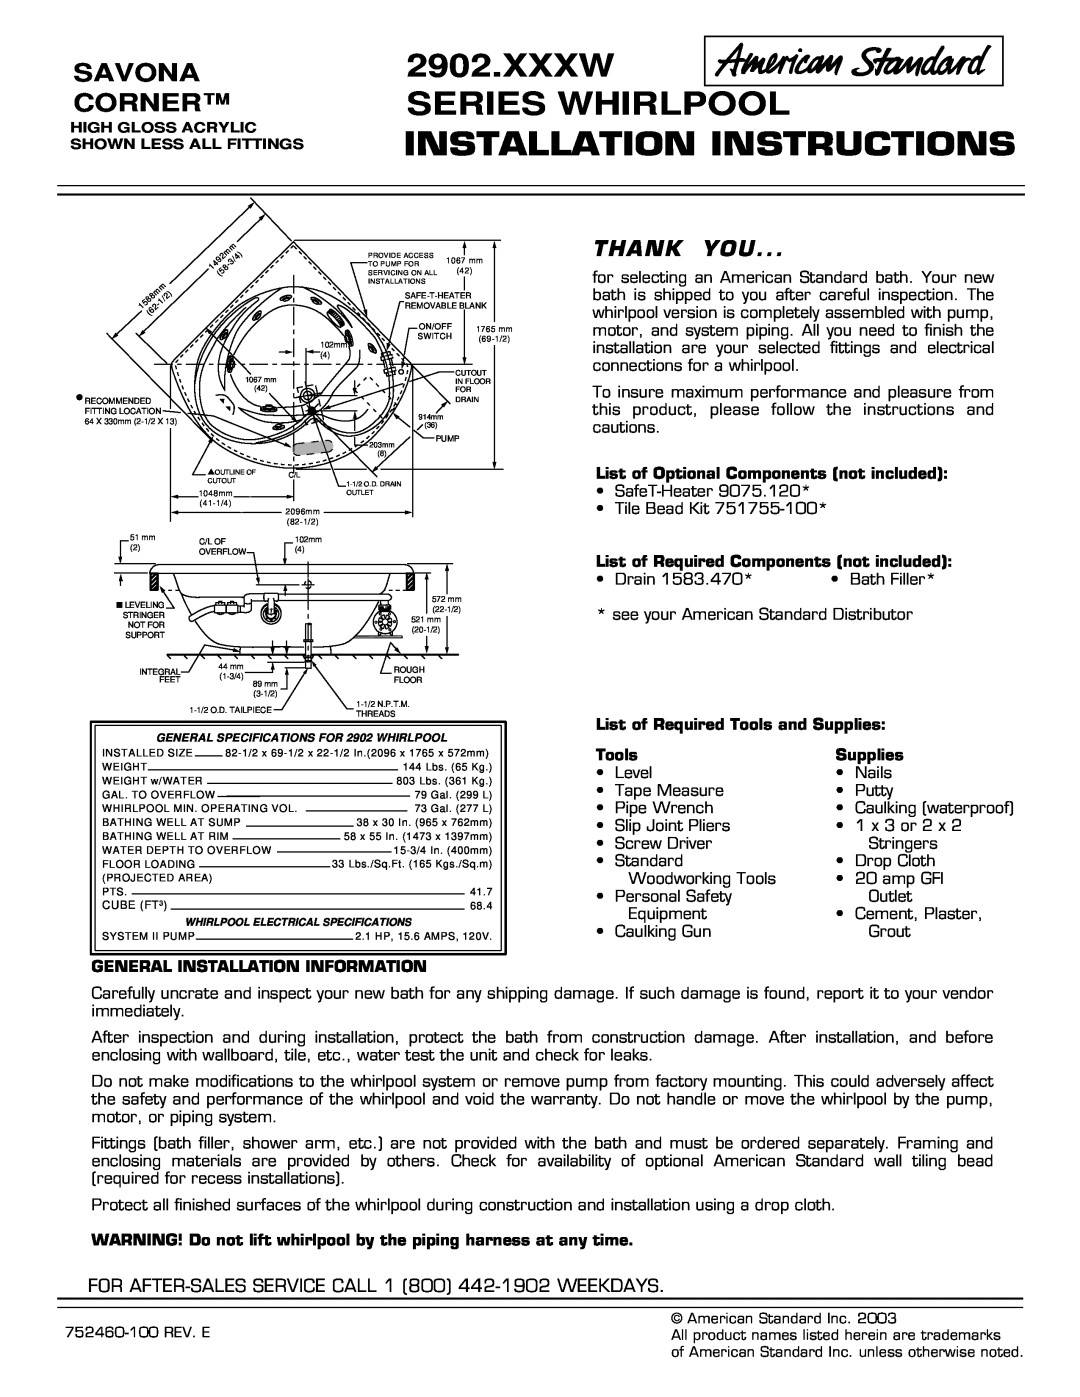 American Standard 2902.XXXW Series installation instructions Xxxw Series Whirlpool, Installation Instructions, Thank You 